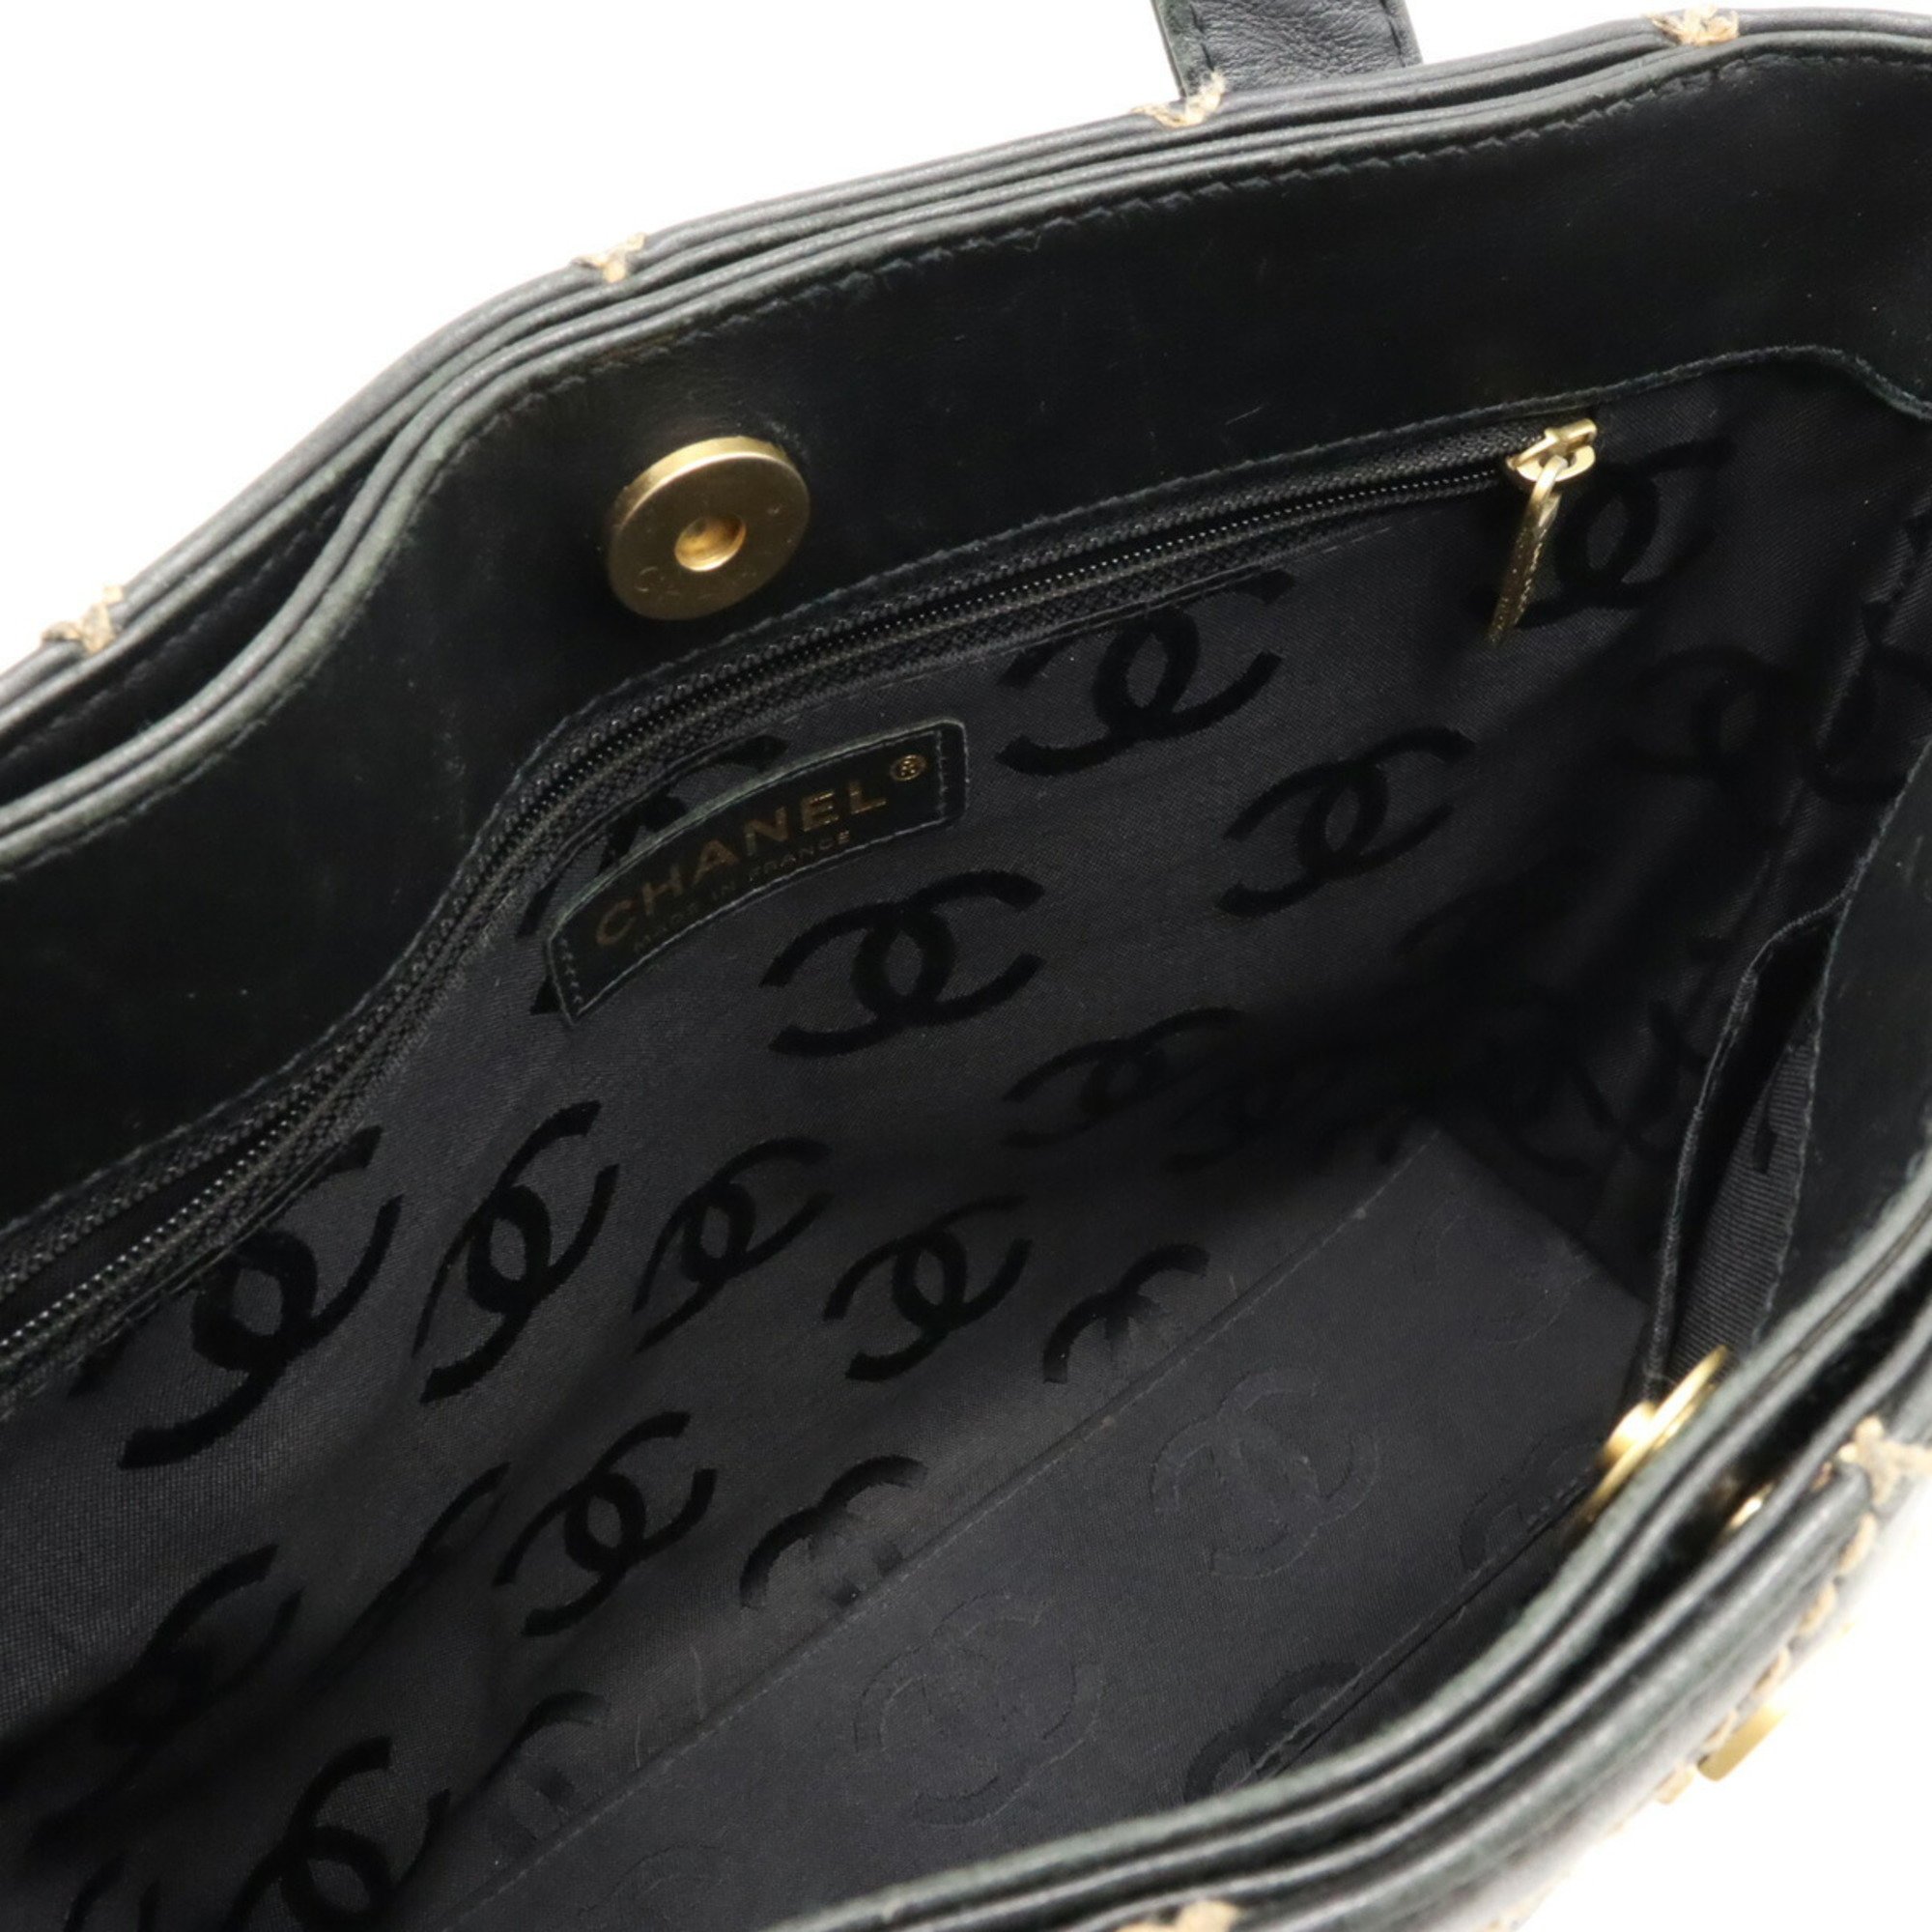 CHANEL Wild Stitch Coco Mark Tote Bag Handbag Leather Black A18126